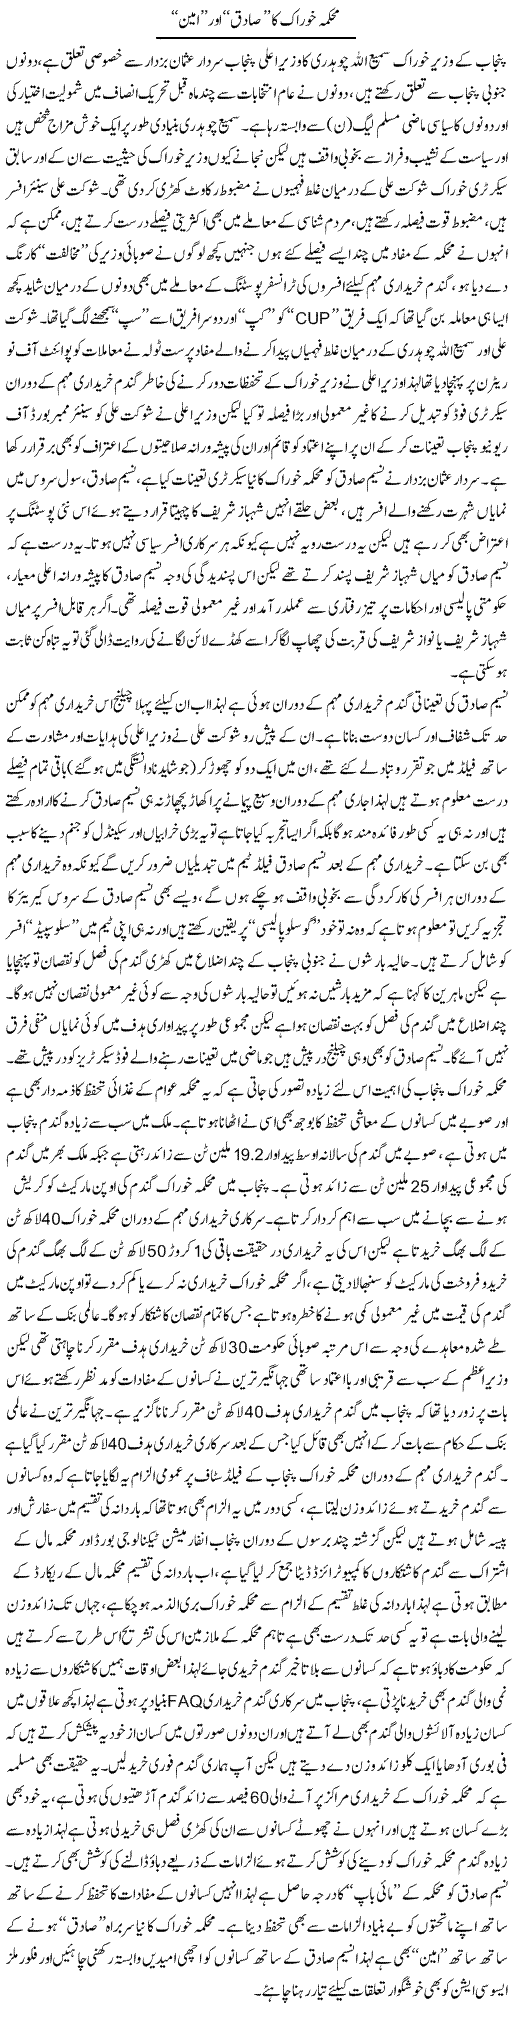 Mehkma Khorak Ka Sadiq Aur Ameen | Rizwan Asif | Daily Urdu Columns